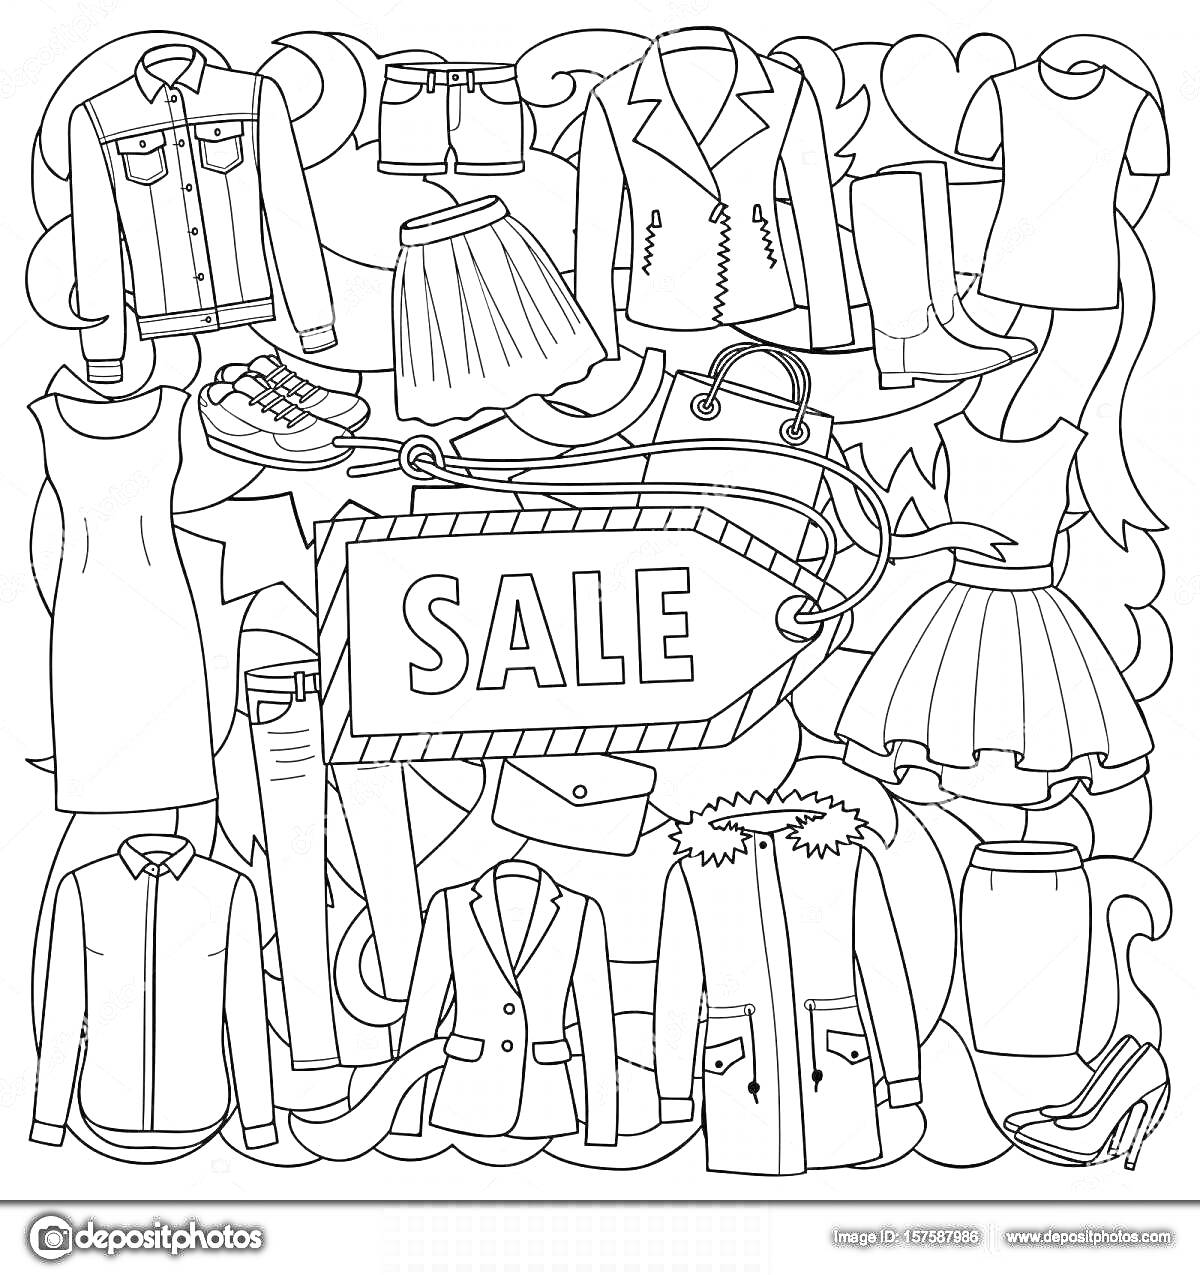 На раскраске изображено: Одежда, Распродажа, Скидки, Мода, Рубашки, Юбки